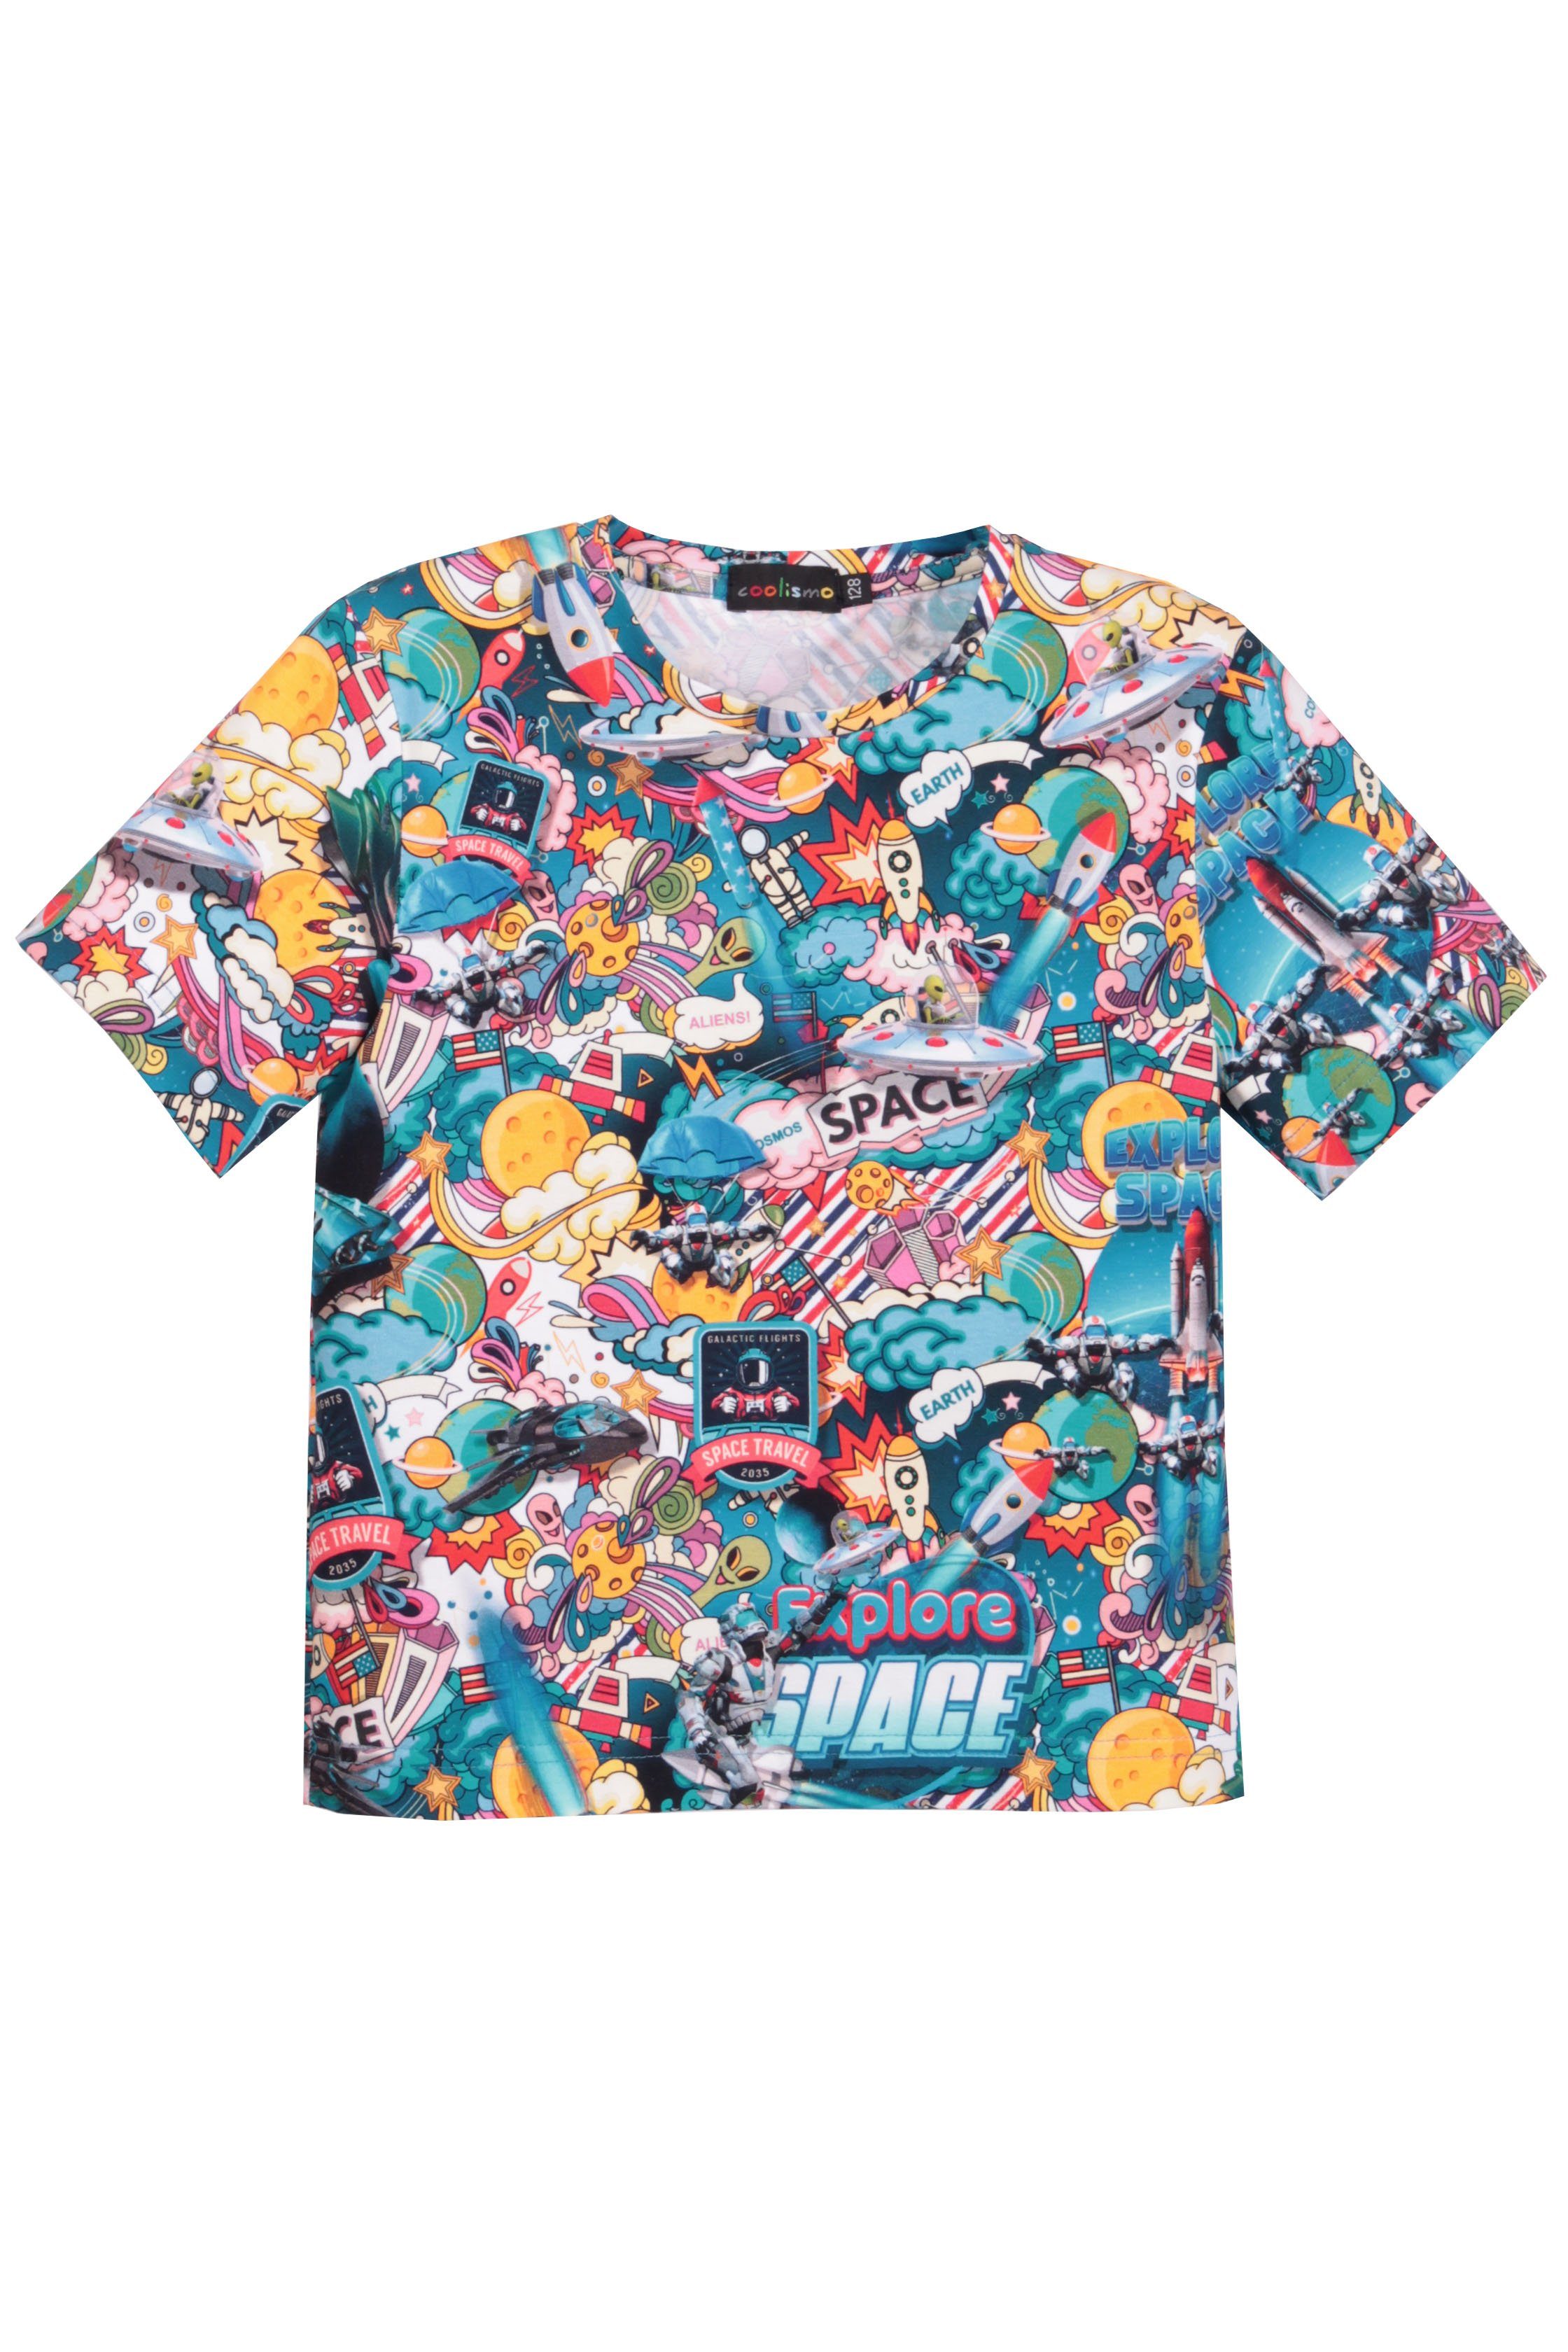 Rundhalsauschnitt, Alloverprint, Baumwolle coolismo mit für Print-Shirt Jungen Comic-Raketen-Motiv T-Shirt